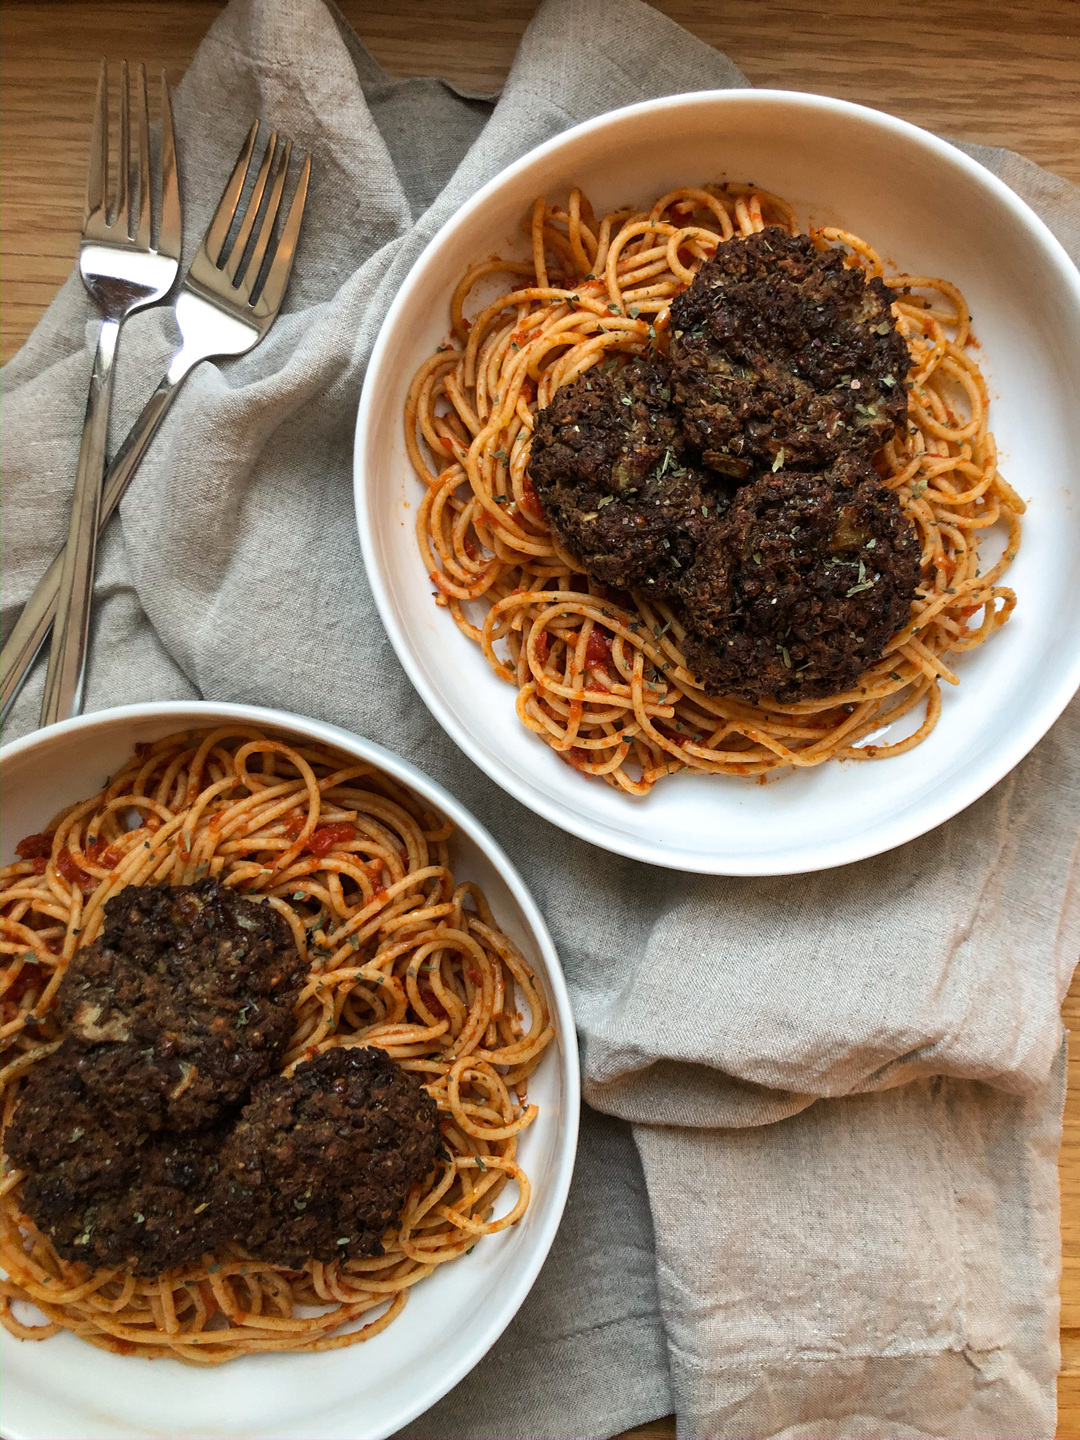 Lentil "meatballs" with spaghetti